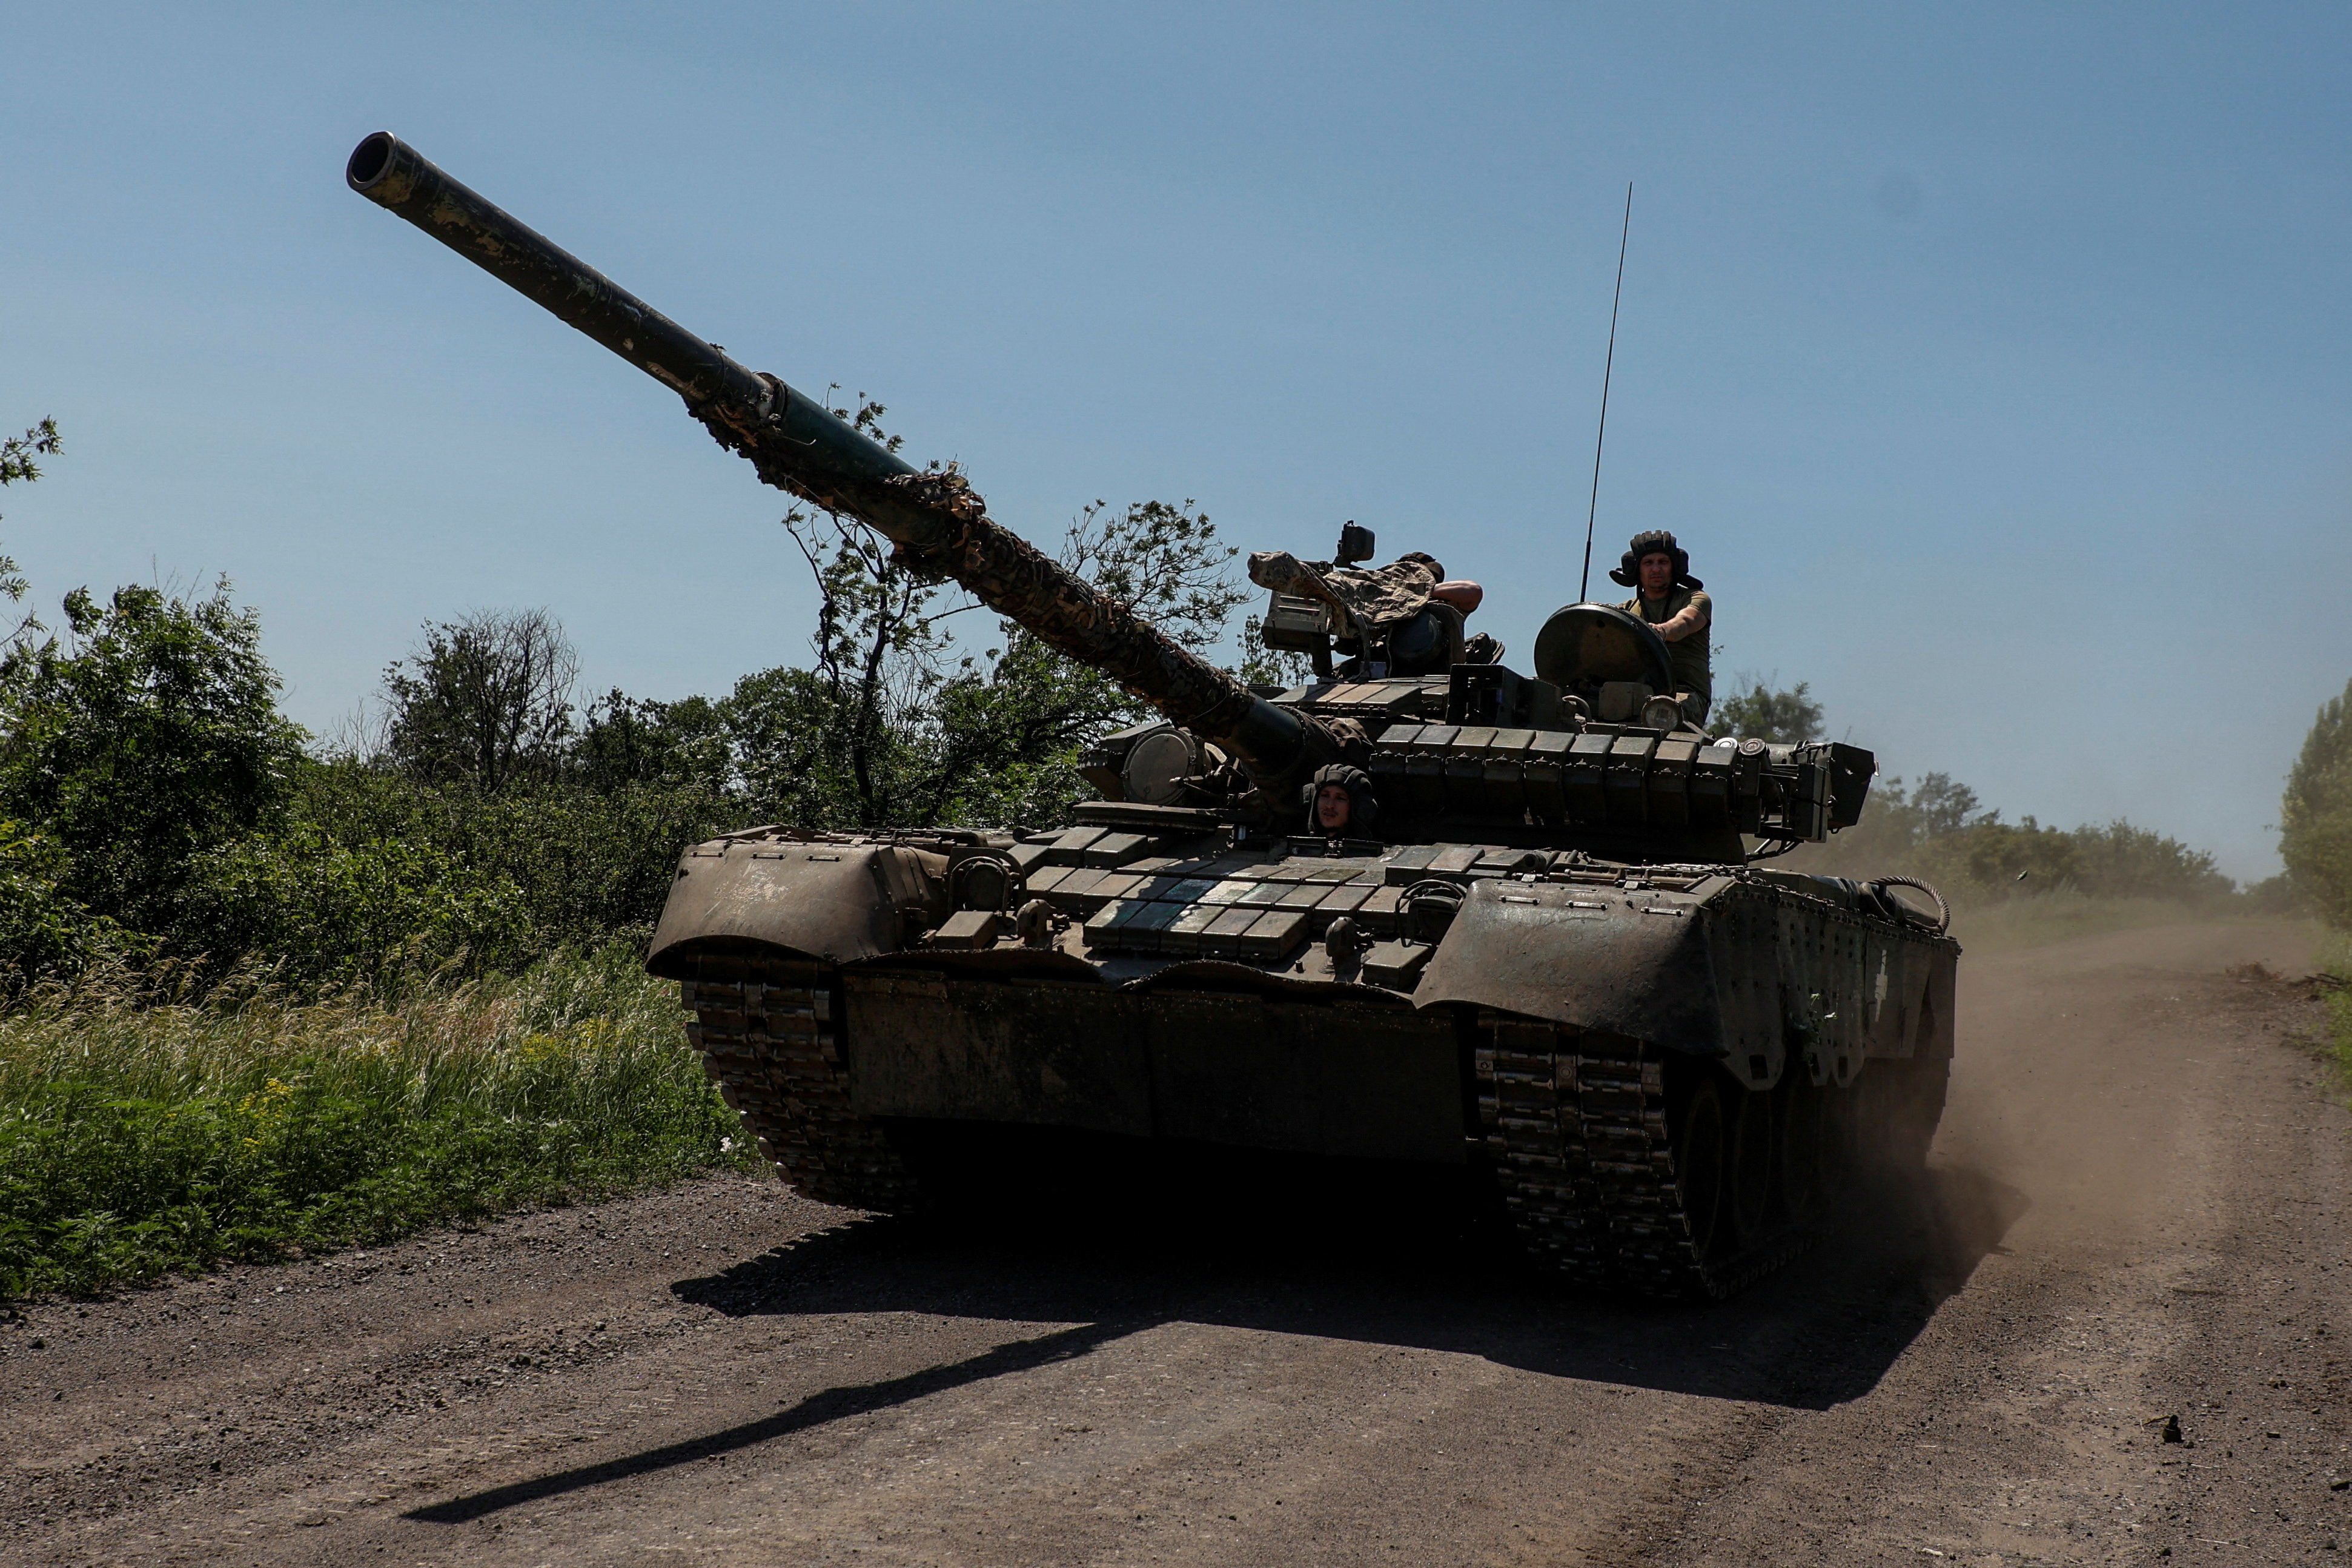 Ukrainian servicemen ride in a T-80 main battle tank captured earlier from Russian troops, along a road near the front line town of Bakhmut on June 19.